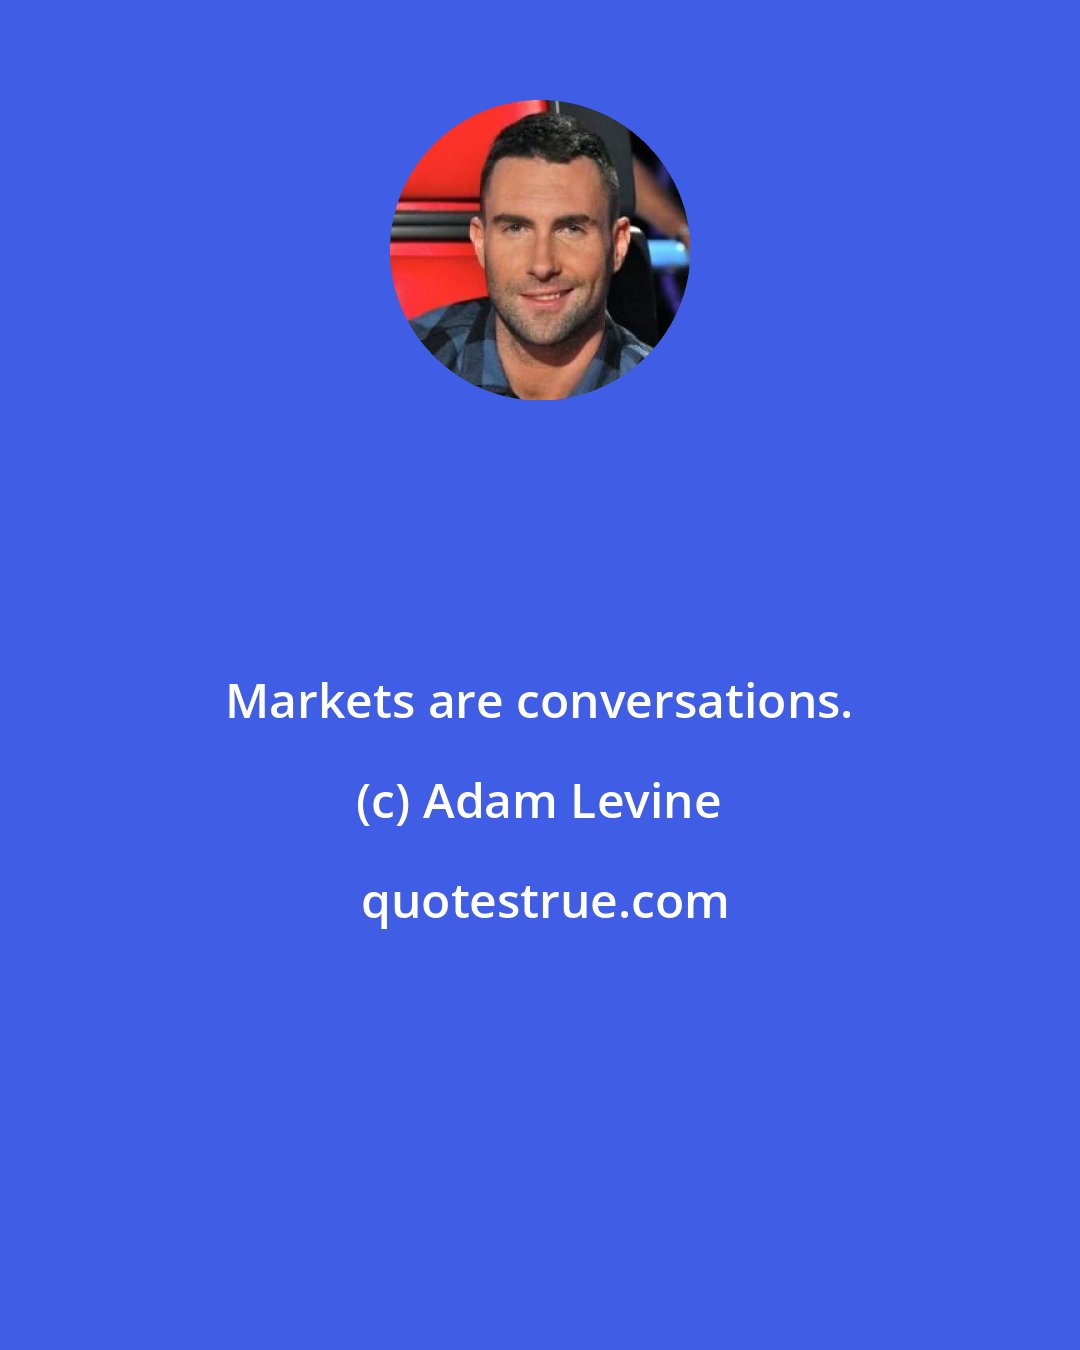 Adam Levine: Markets are conversations.